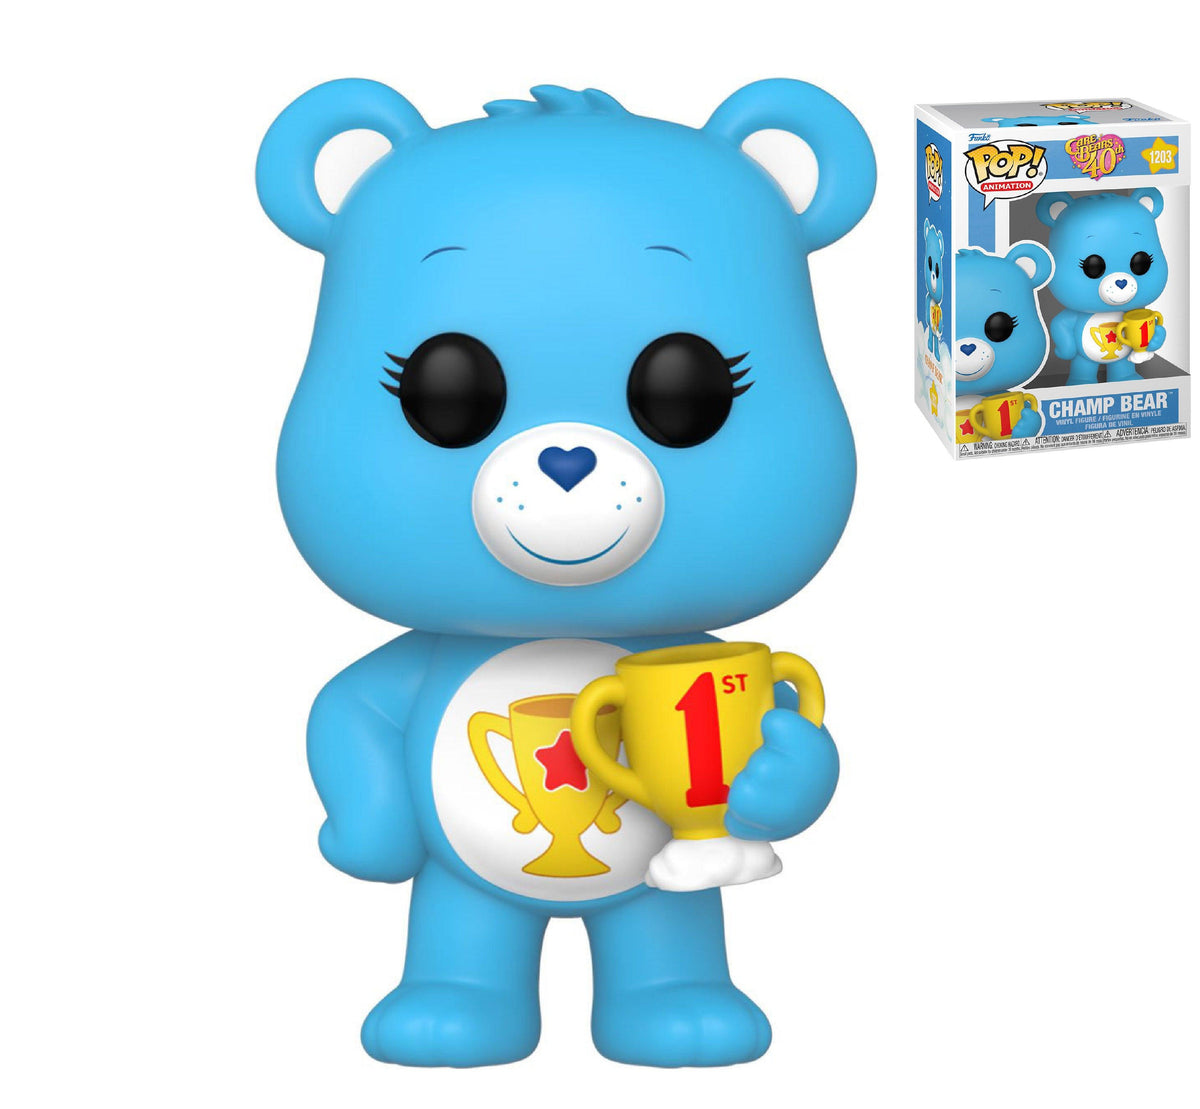 FUNKO POP! ANIMATION: Care Bears - Champ Bear